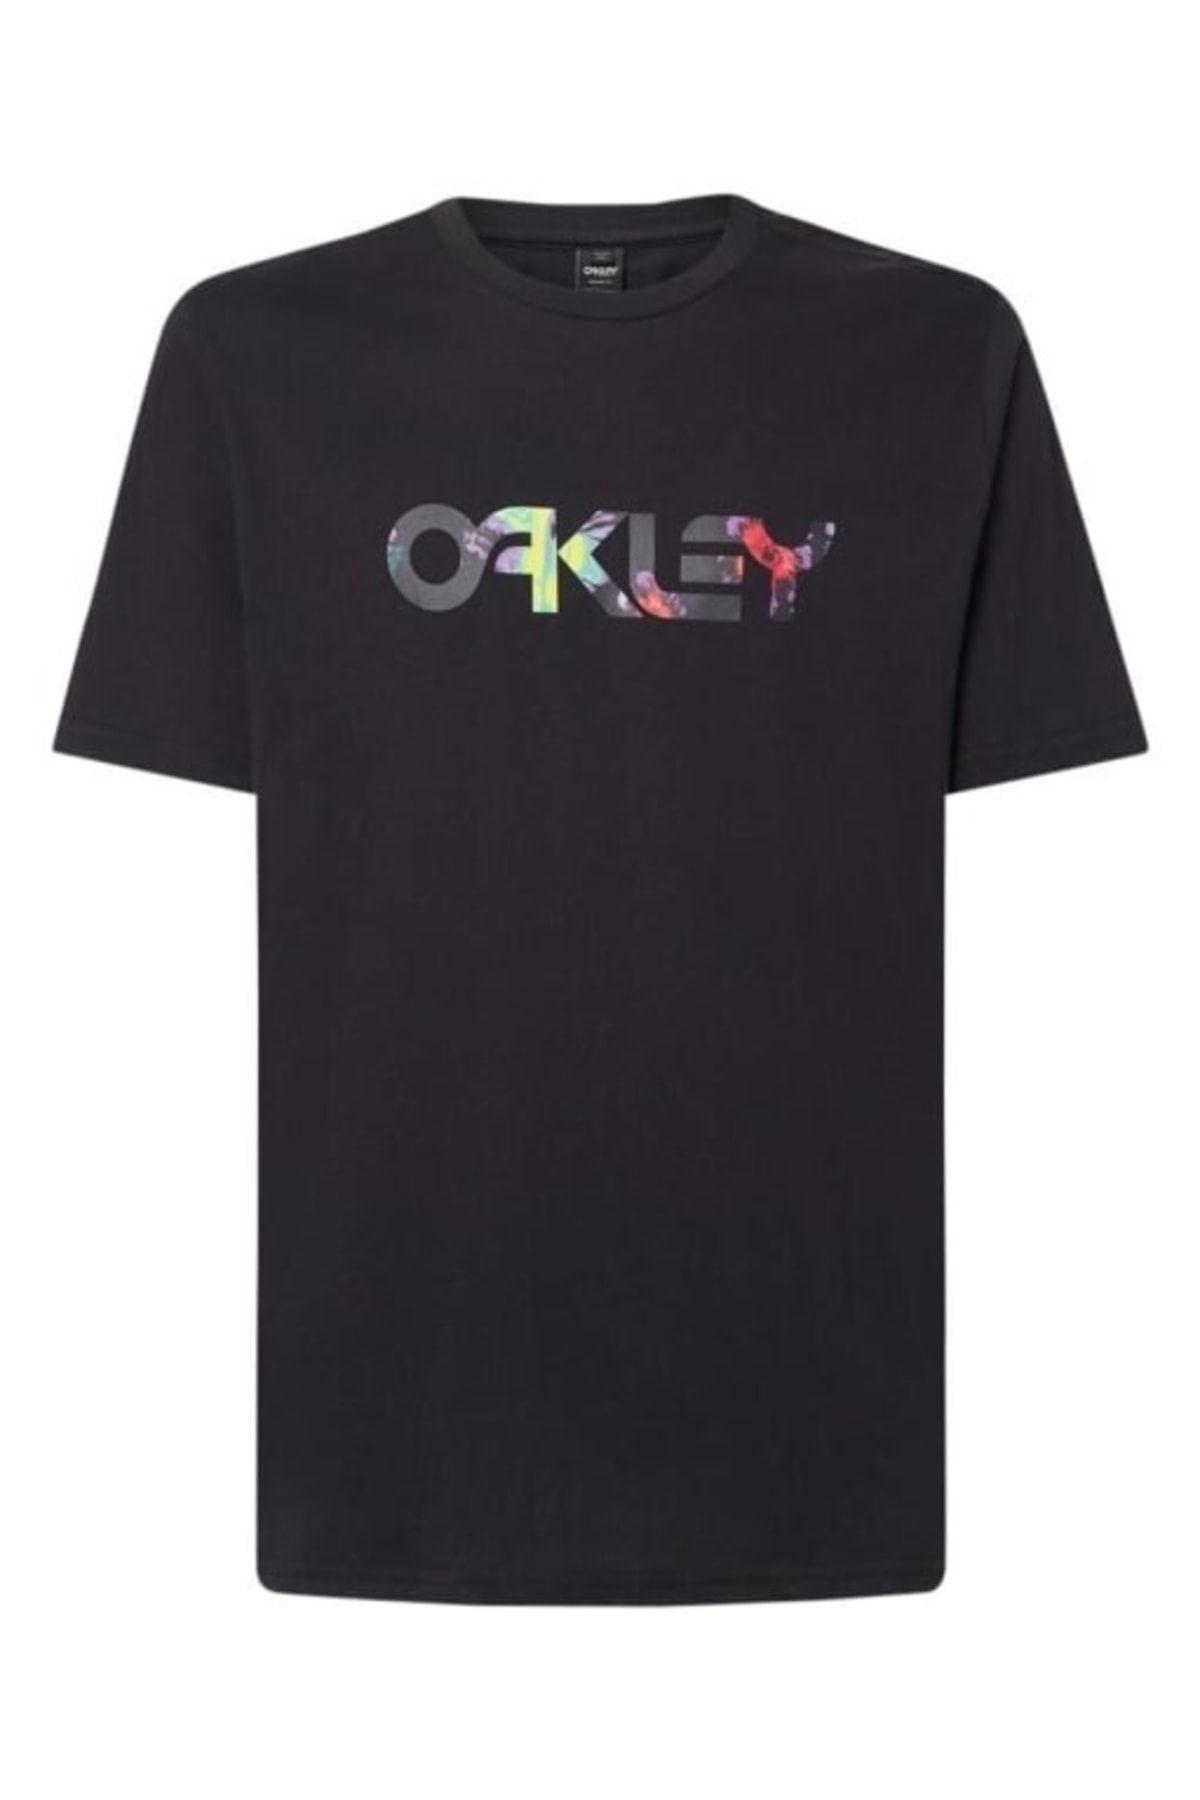 Oakley Floral Splah B1b Tee Siyah Tişört